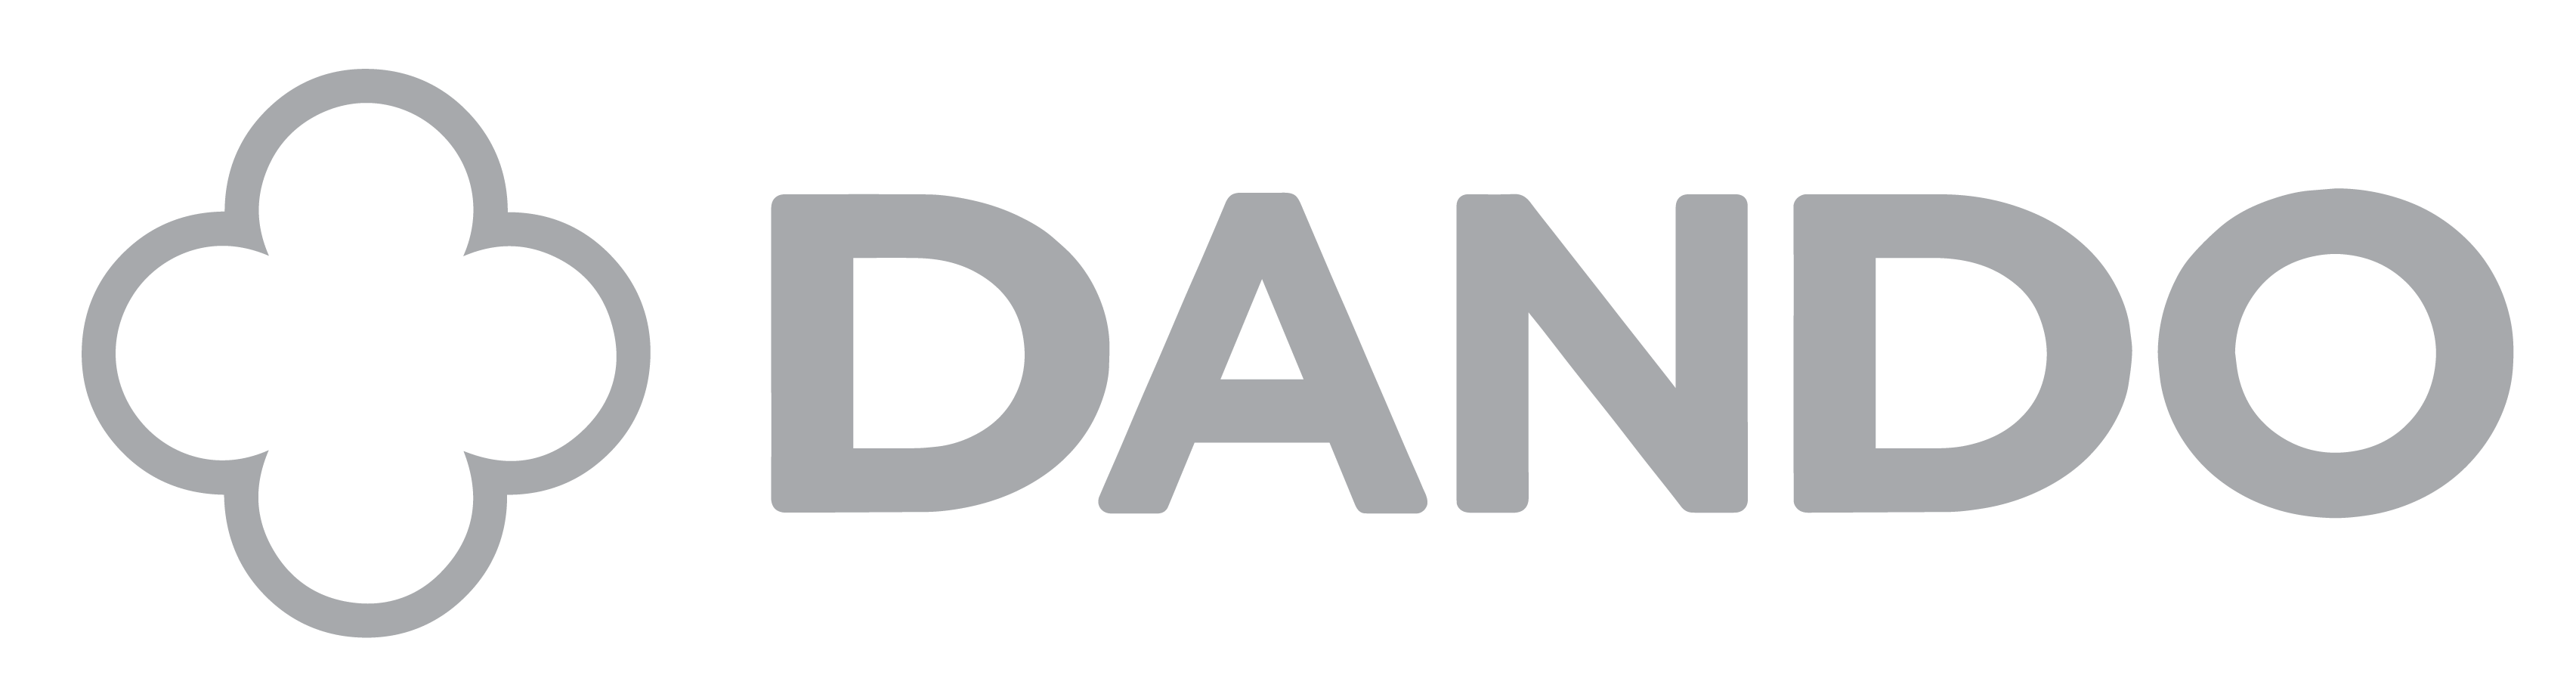 Dando Drilling International Ltd